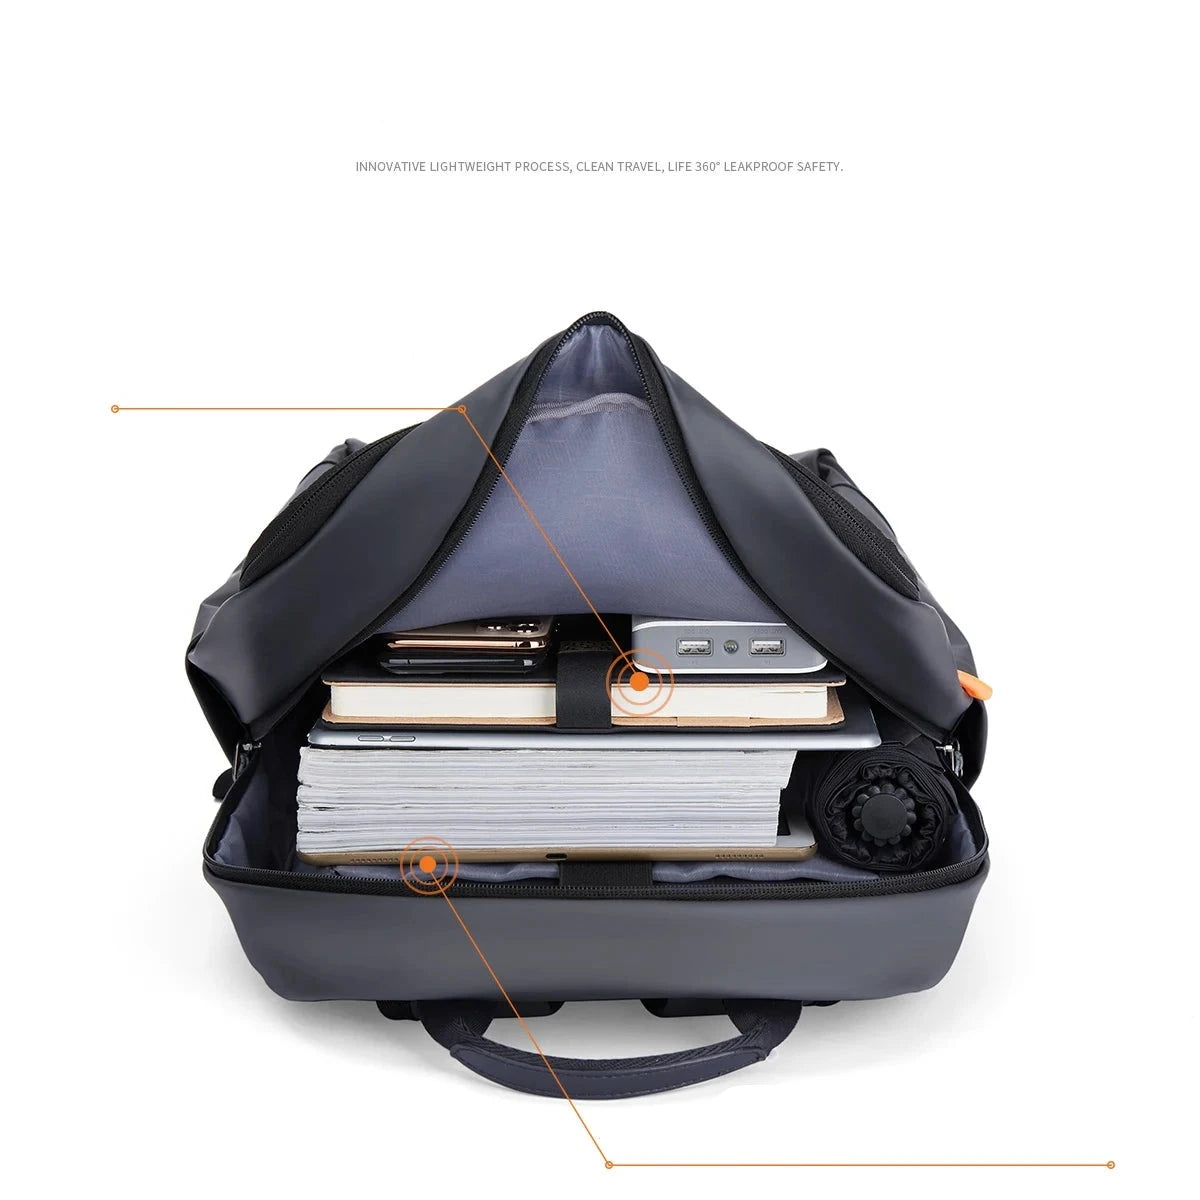 BISON DENIM Large Capacity Backpack Men Women Business Laptop Computer Bag Student School Bags Multifunctional Travel Backpack